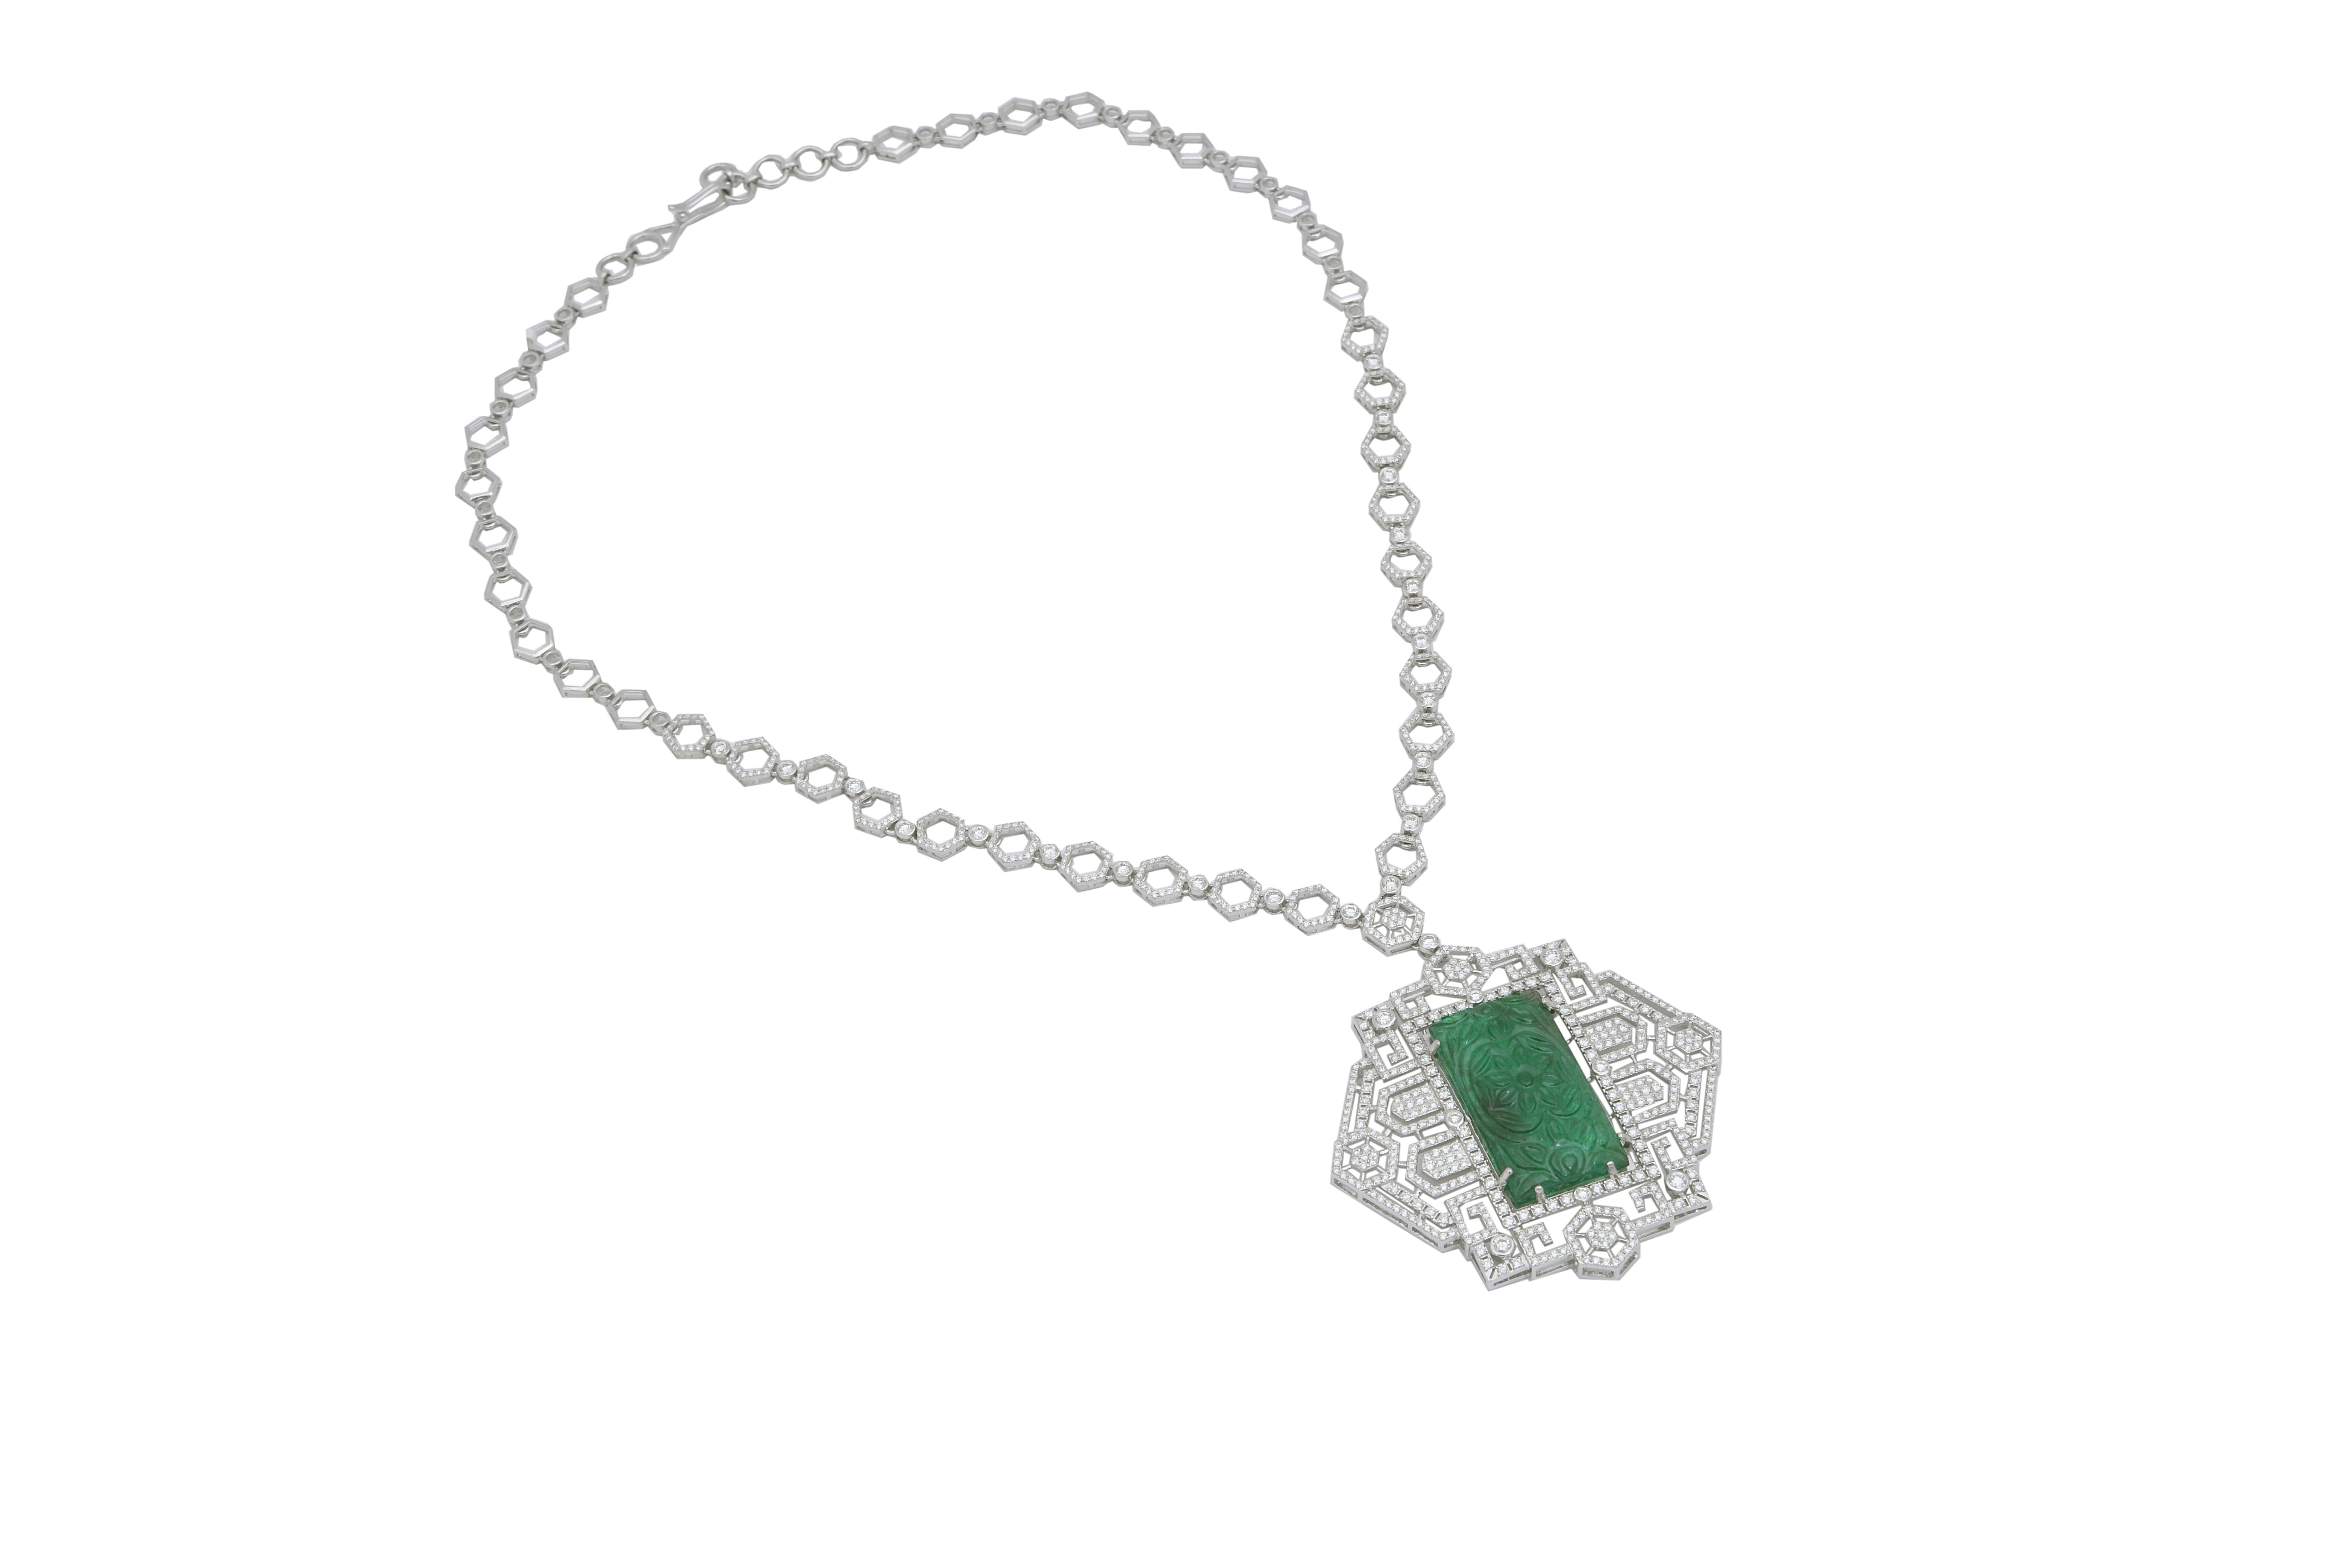 Mixed Cut Natural Emerald Necklace with 4.79 Carat Diamond & 22.14 Carat Emerald For Sale